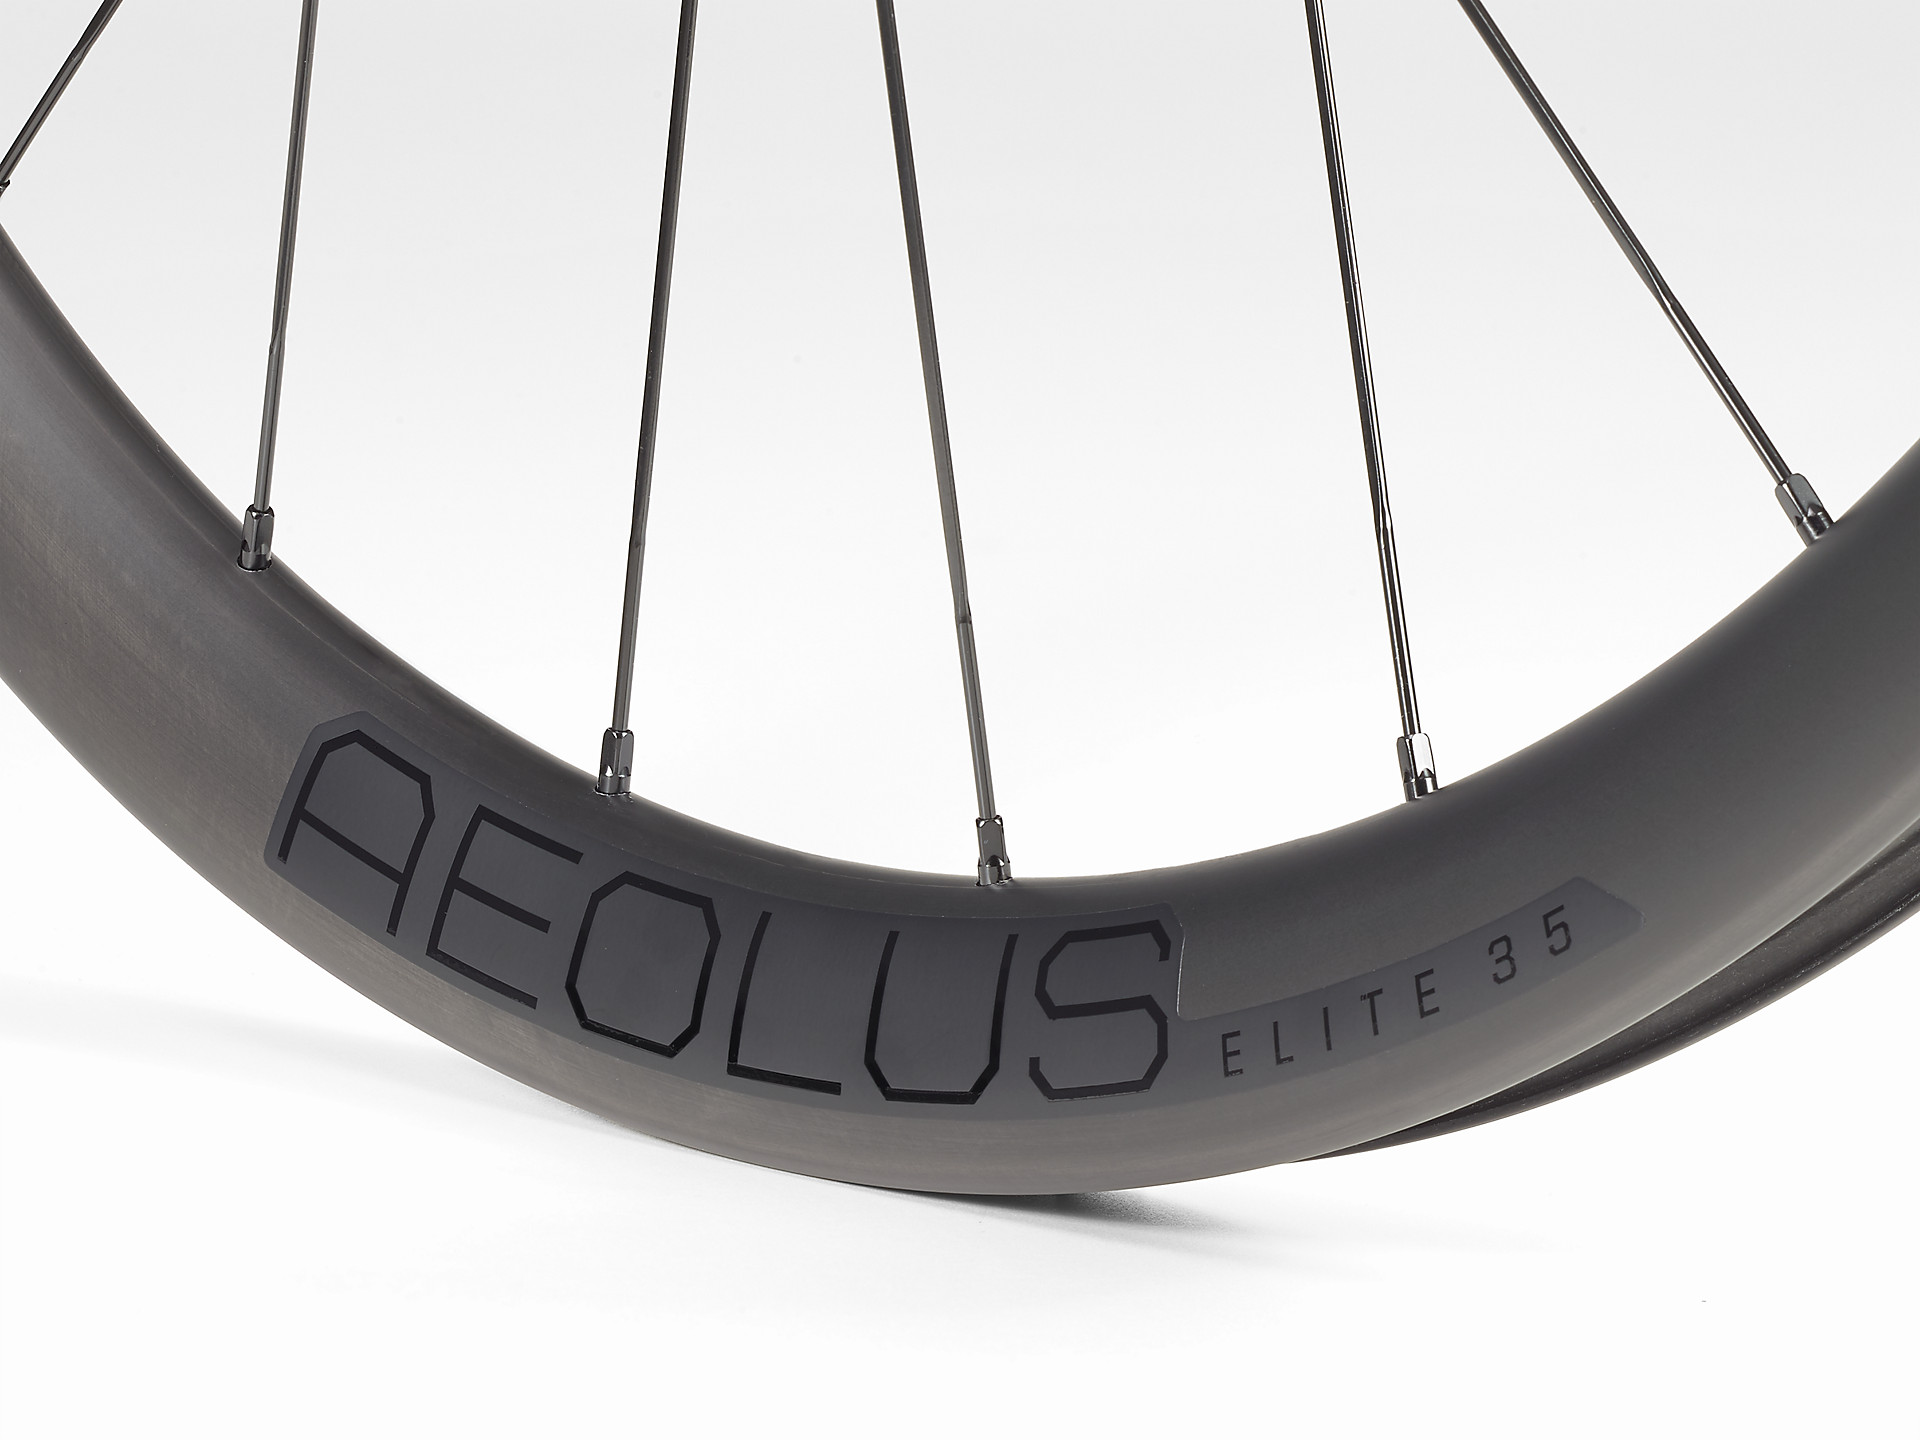 Aerolus Elite 35click to zoom image